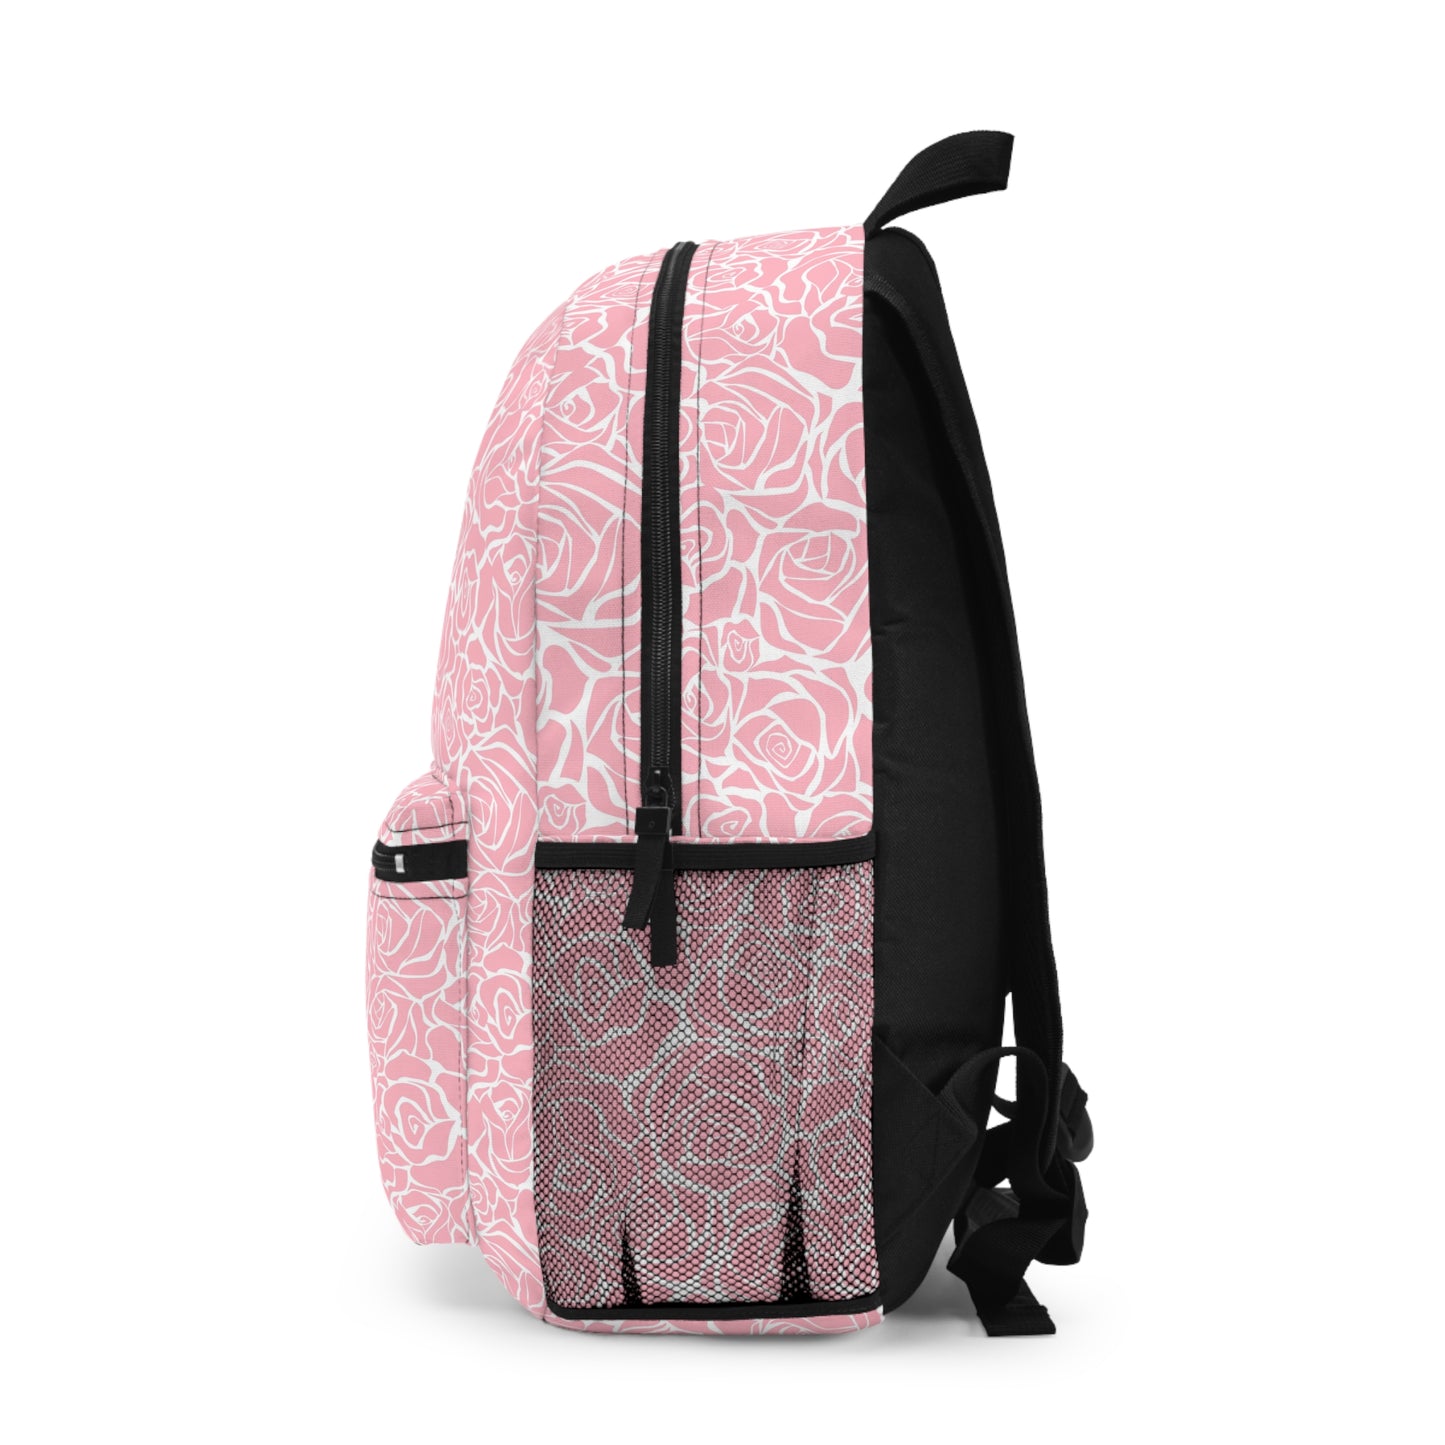 Rosey Backpack